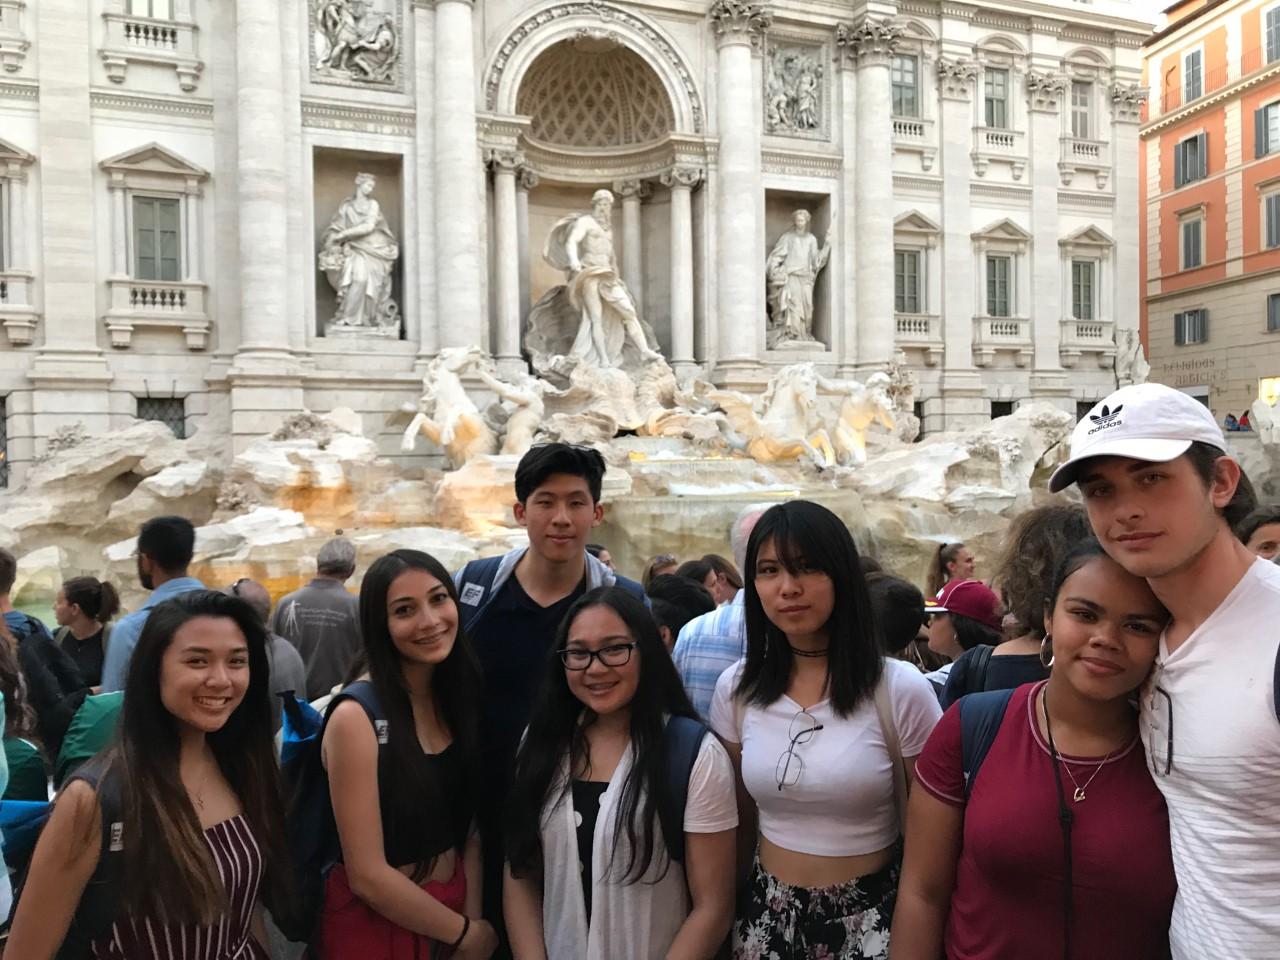 Mr. Padilla and El Camino High students in Rome